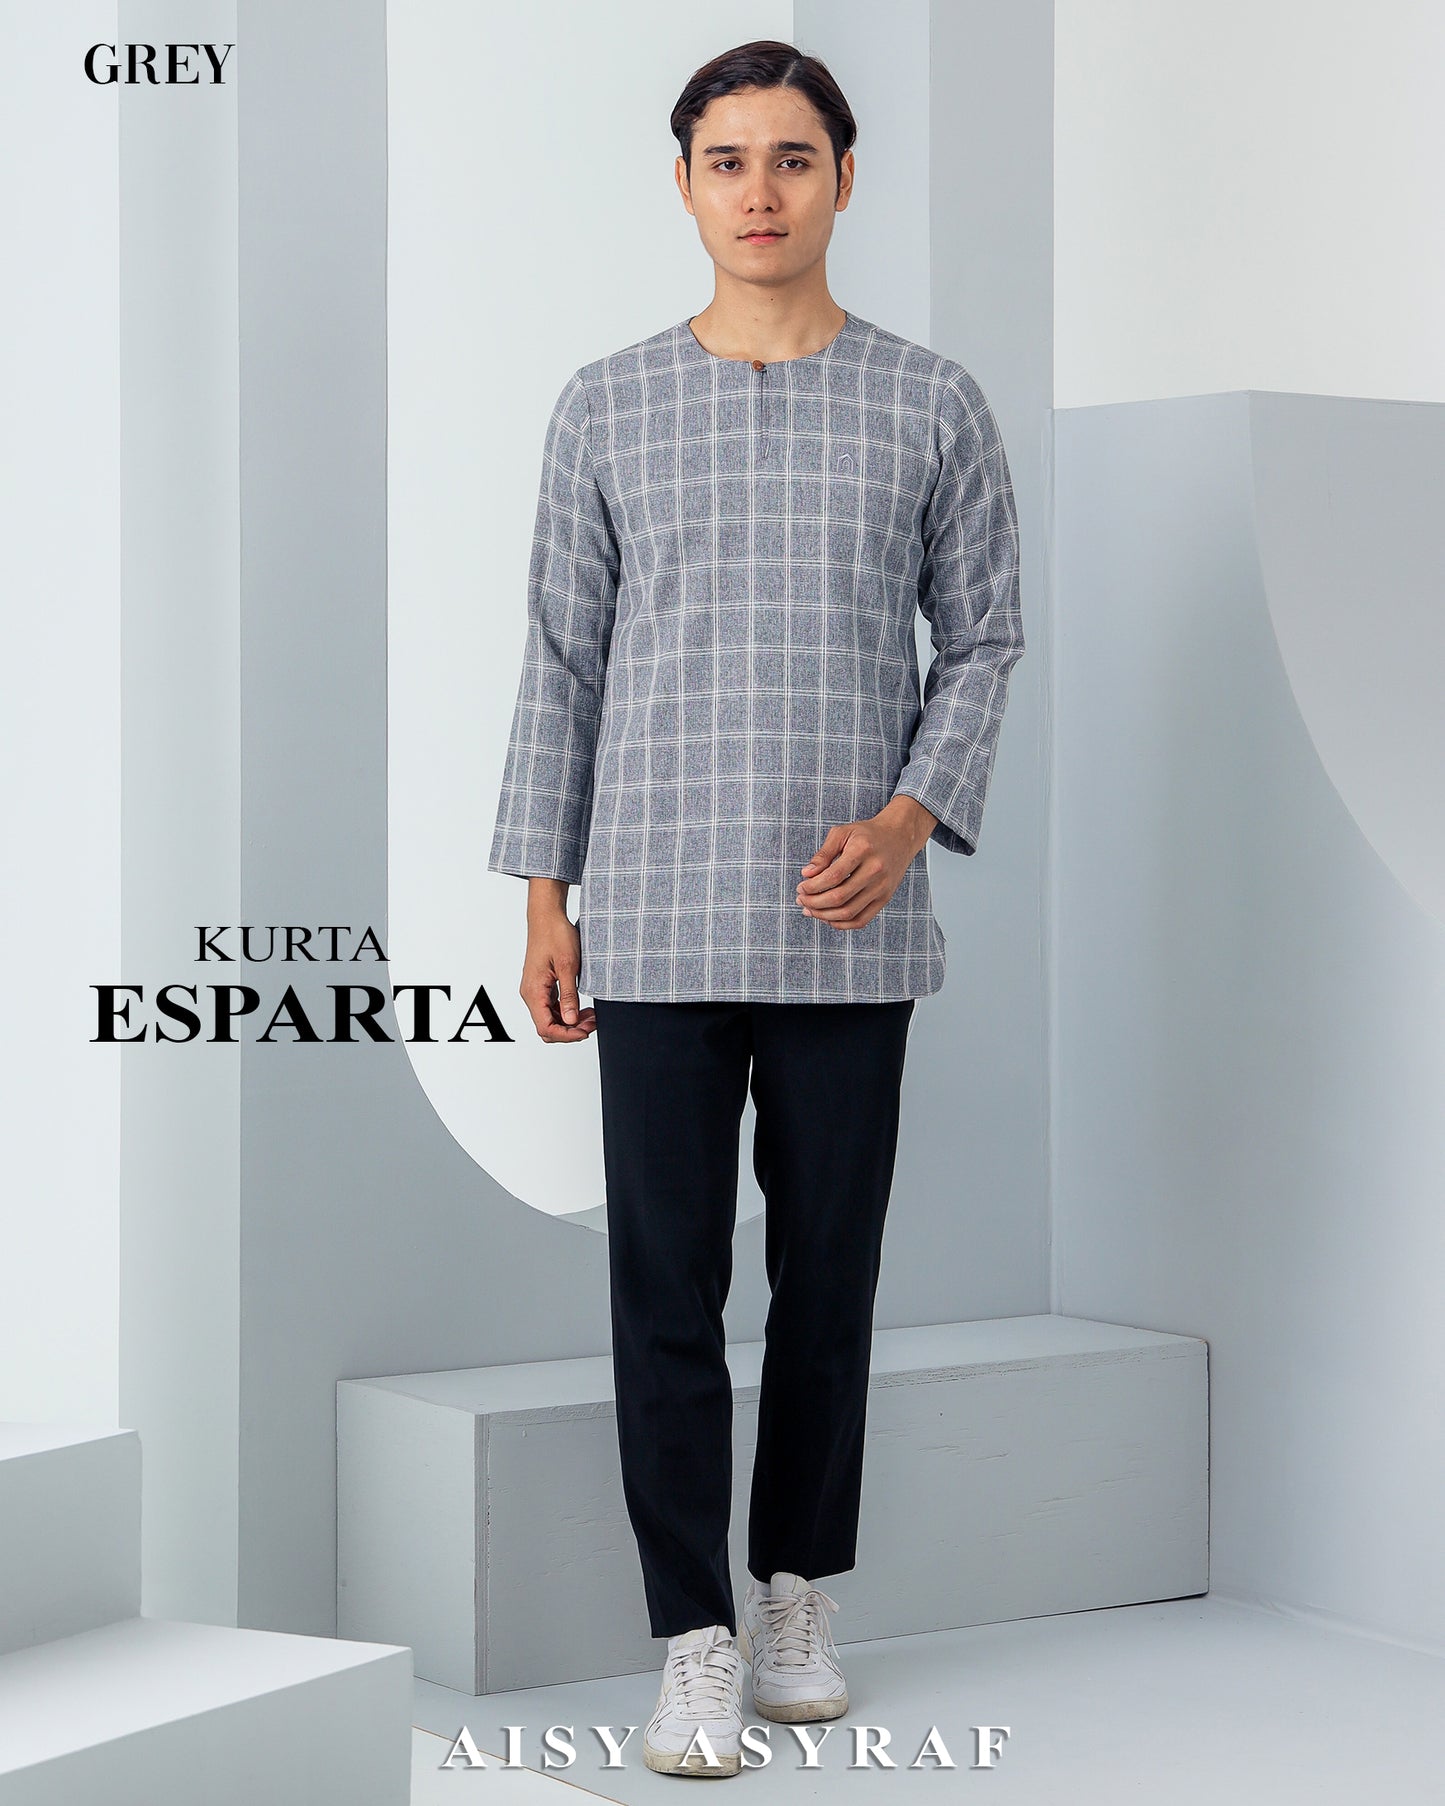 Kurta Esparta - Grey